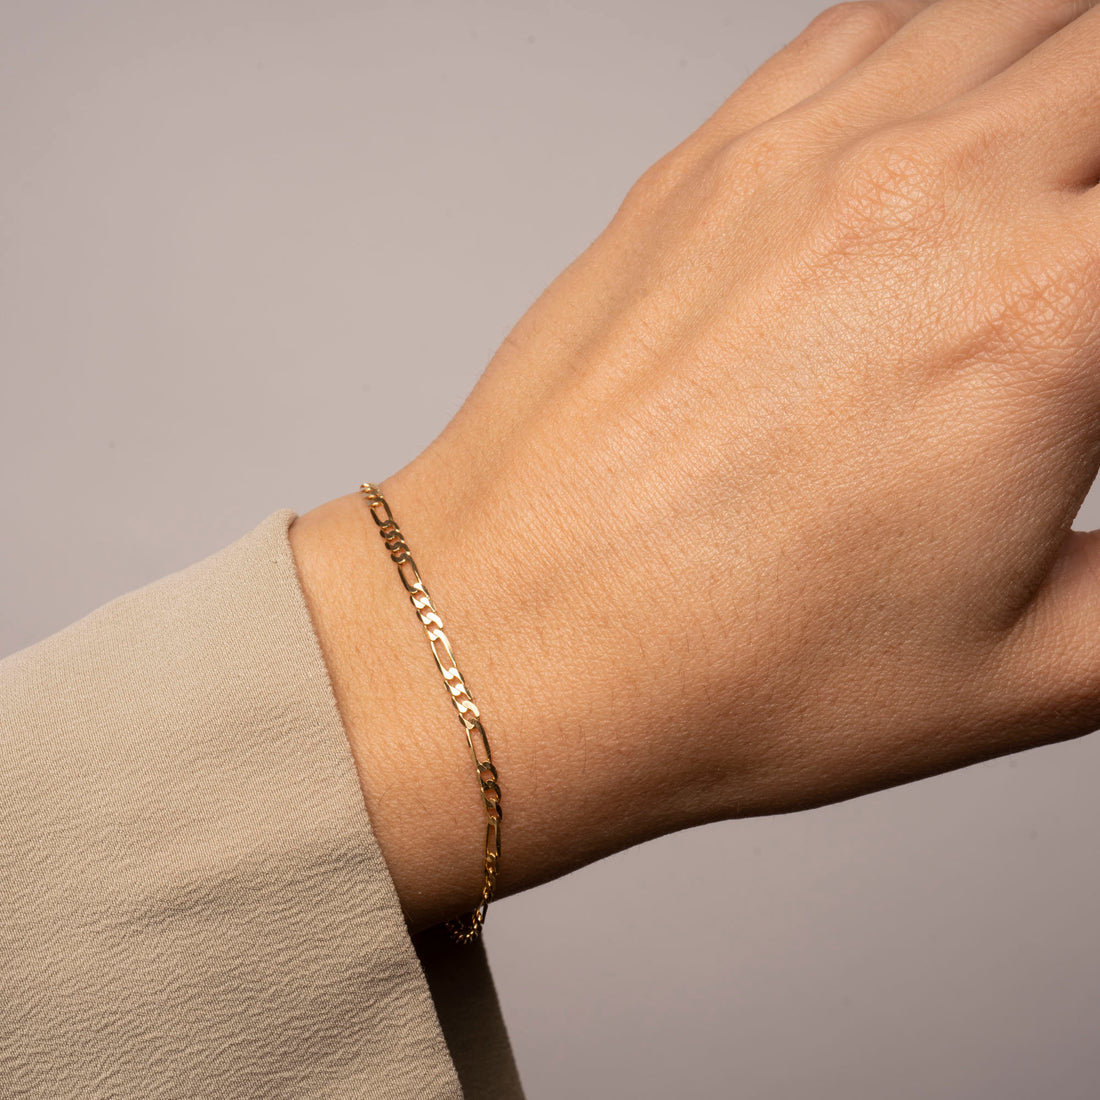 14k Solid Gold Figaro Bracelet, 14k Gold Bracelet, Simple Gold Bracelet, Chain and Link Bracelet, Chain Bracelet, Gift for Her, Rectangle